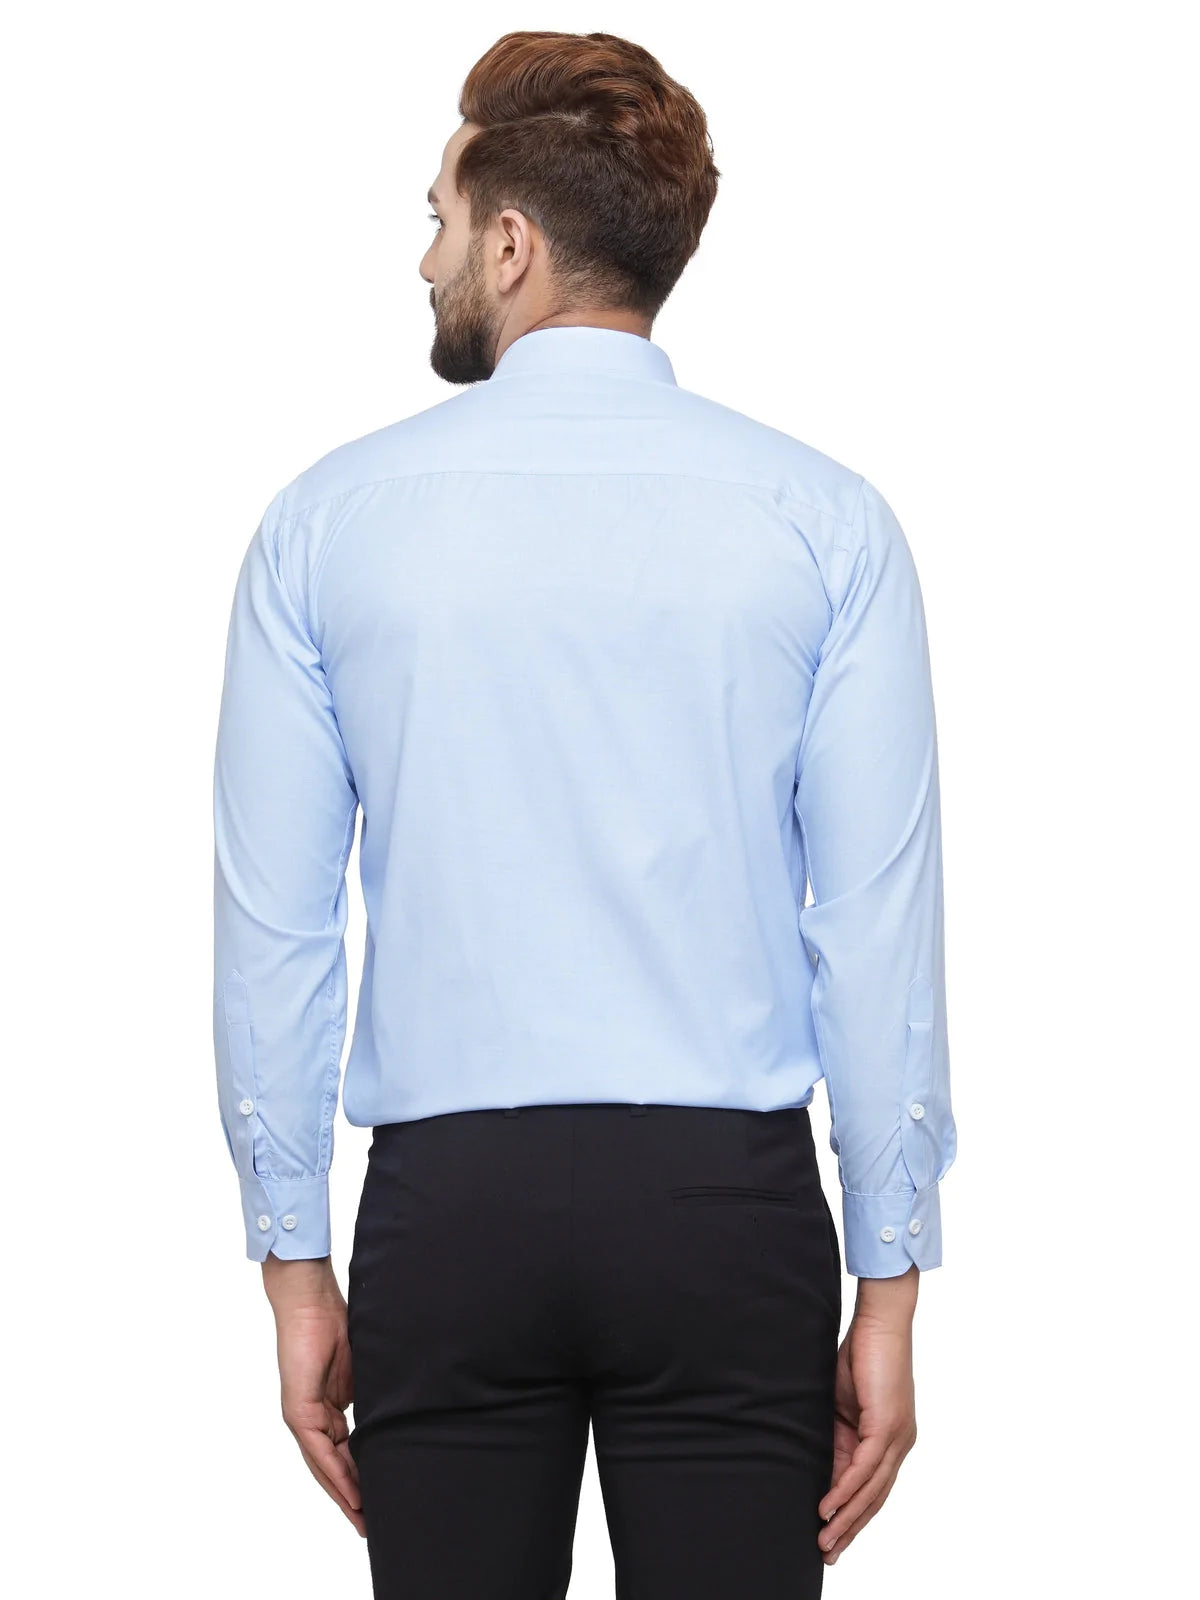 Jainish Blue Formal Shirt with white detailing ( SF 419Blue )